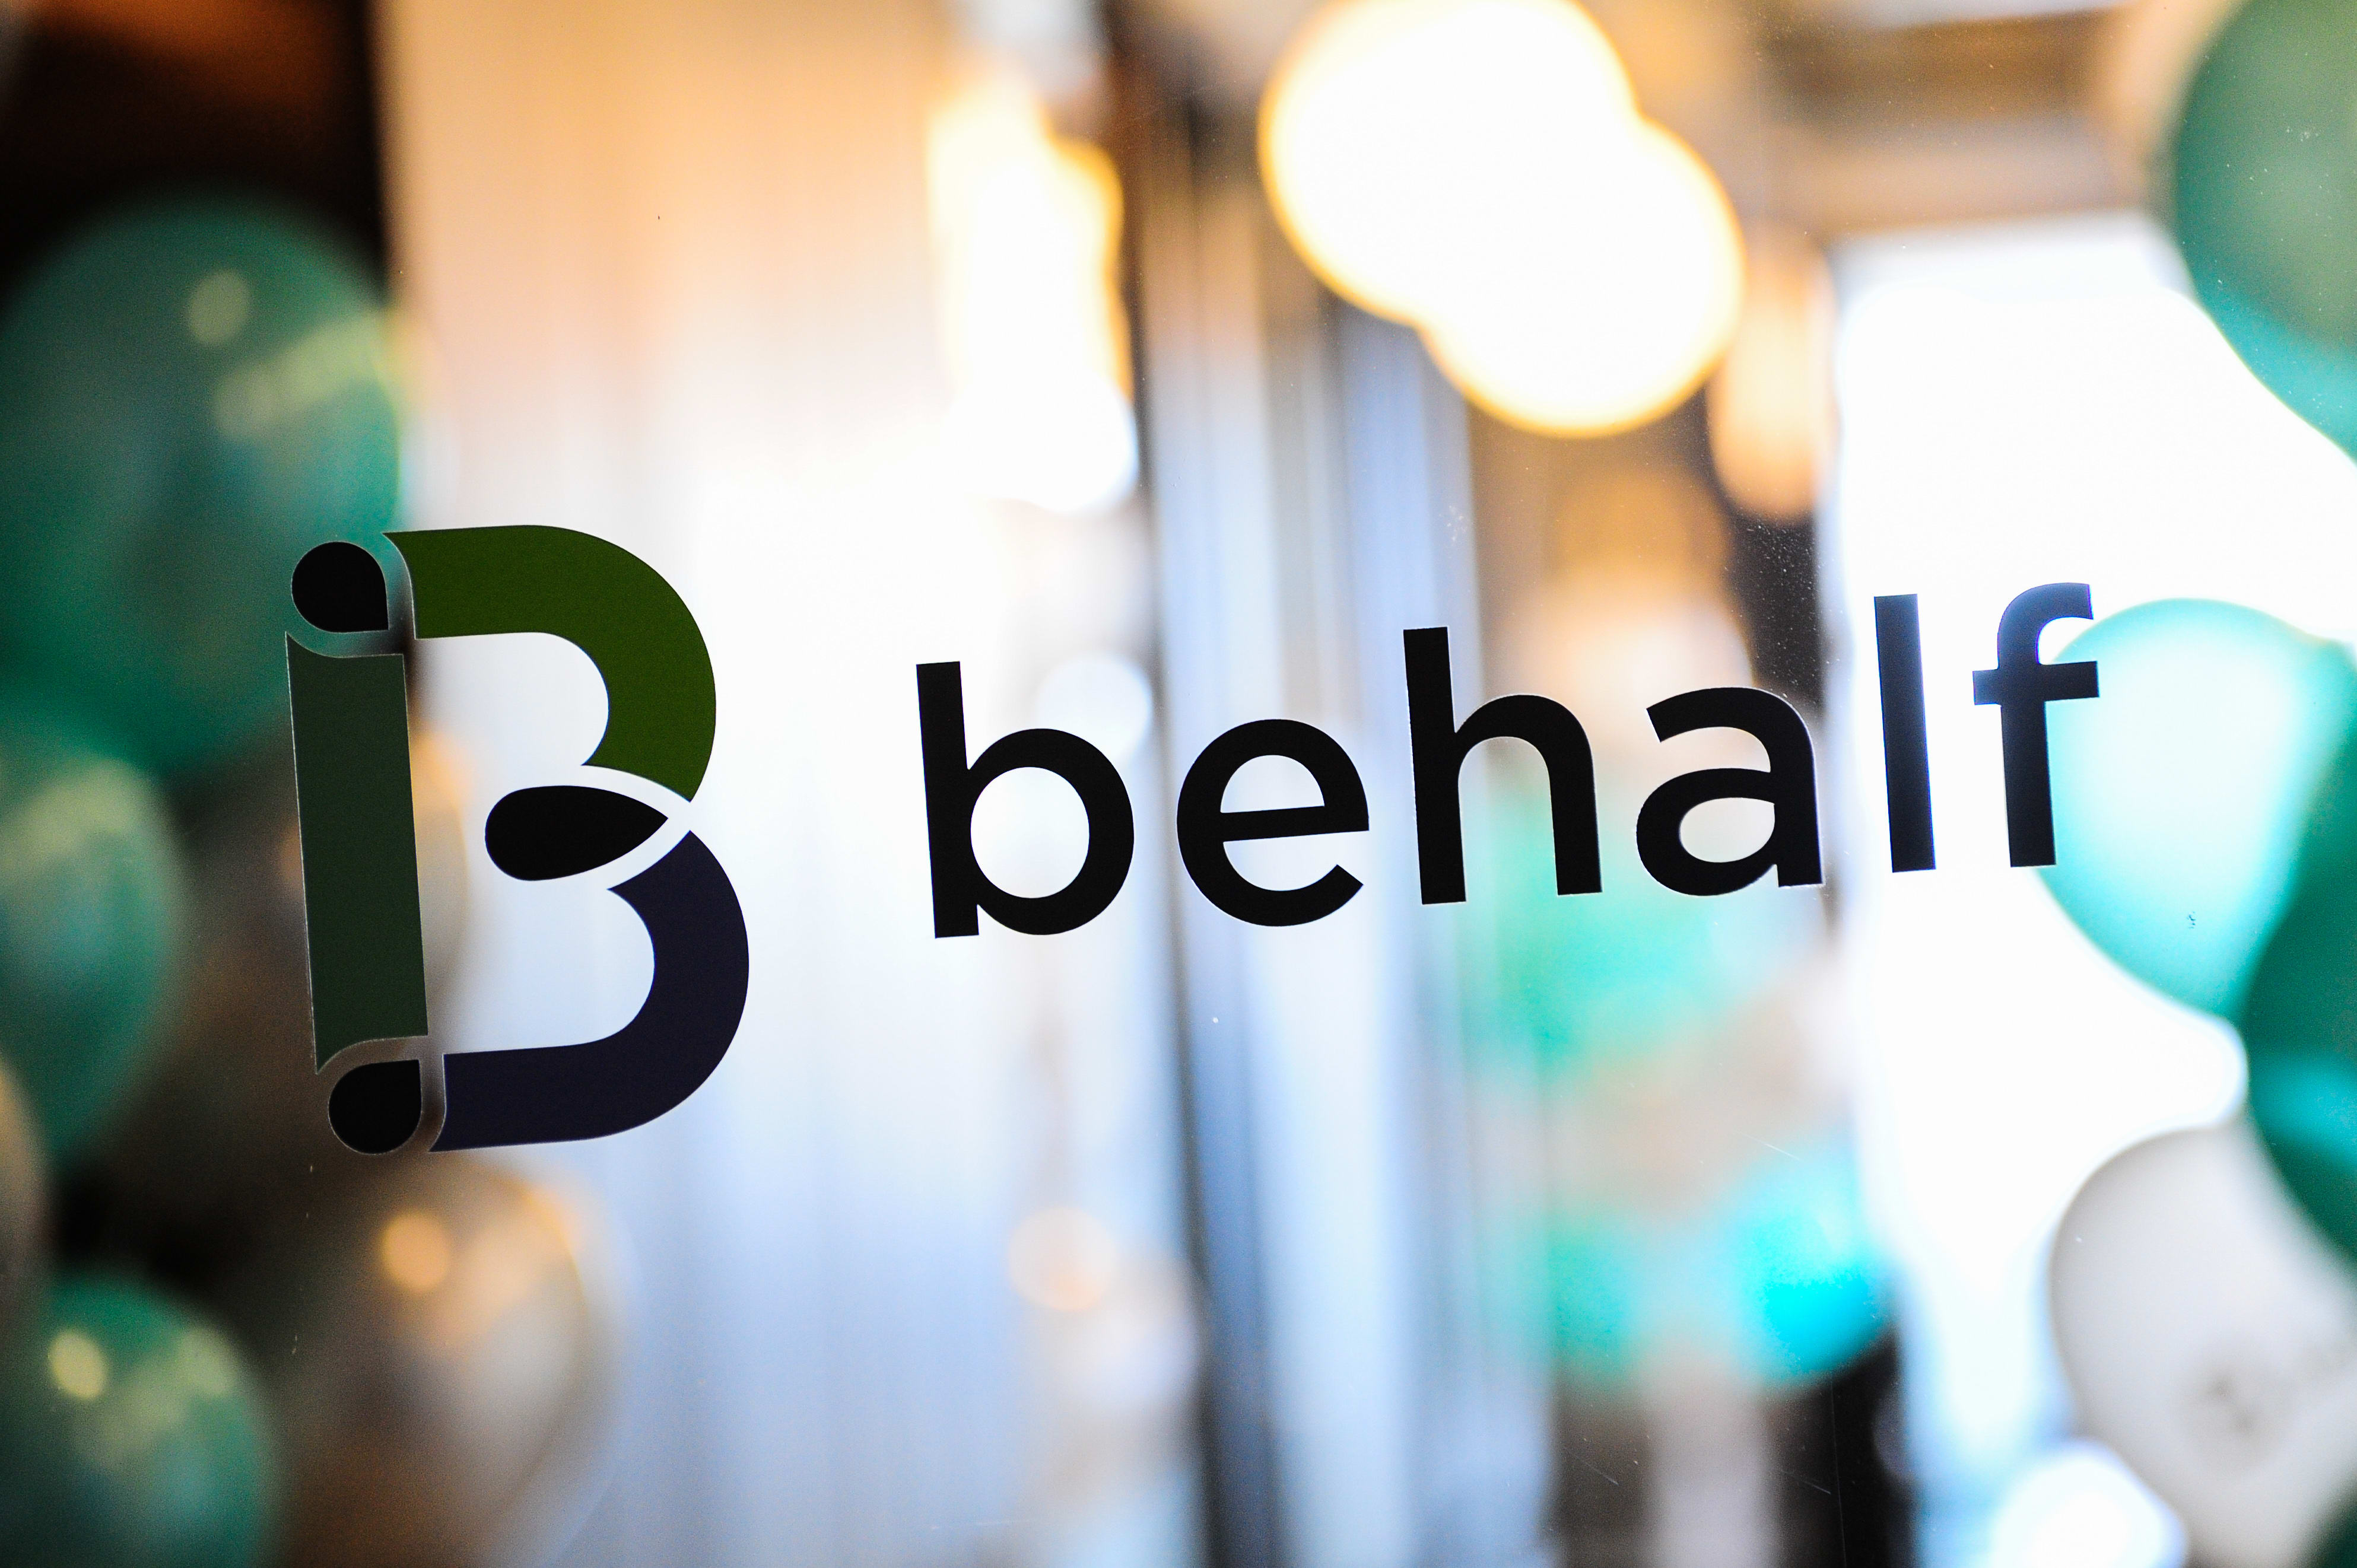 Behalf logo printed on a window